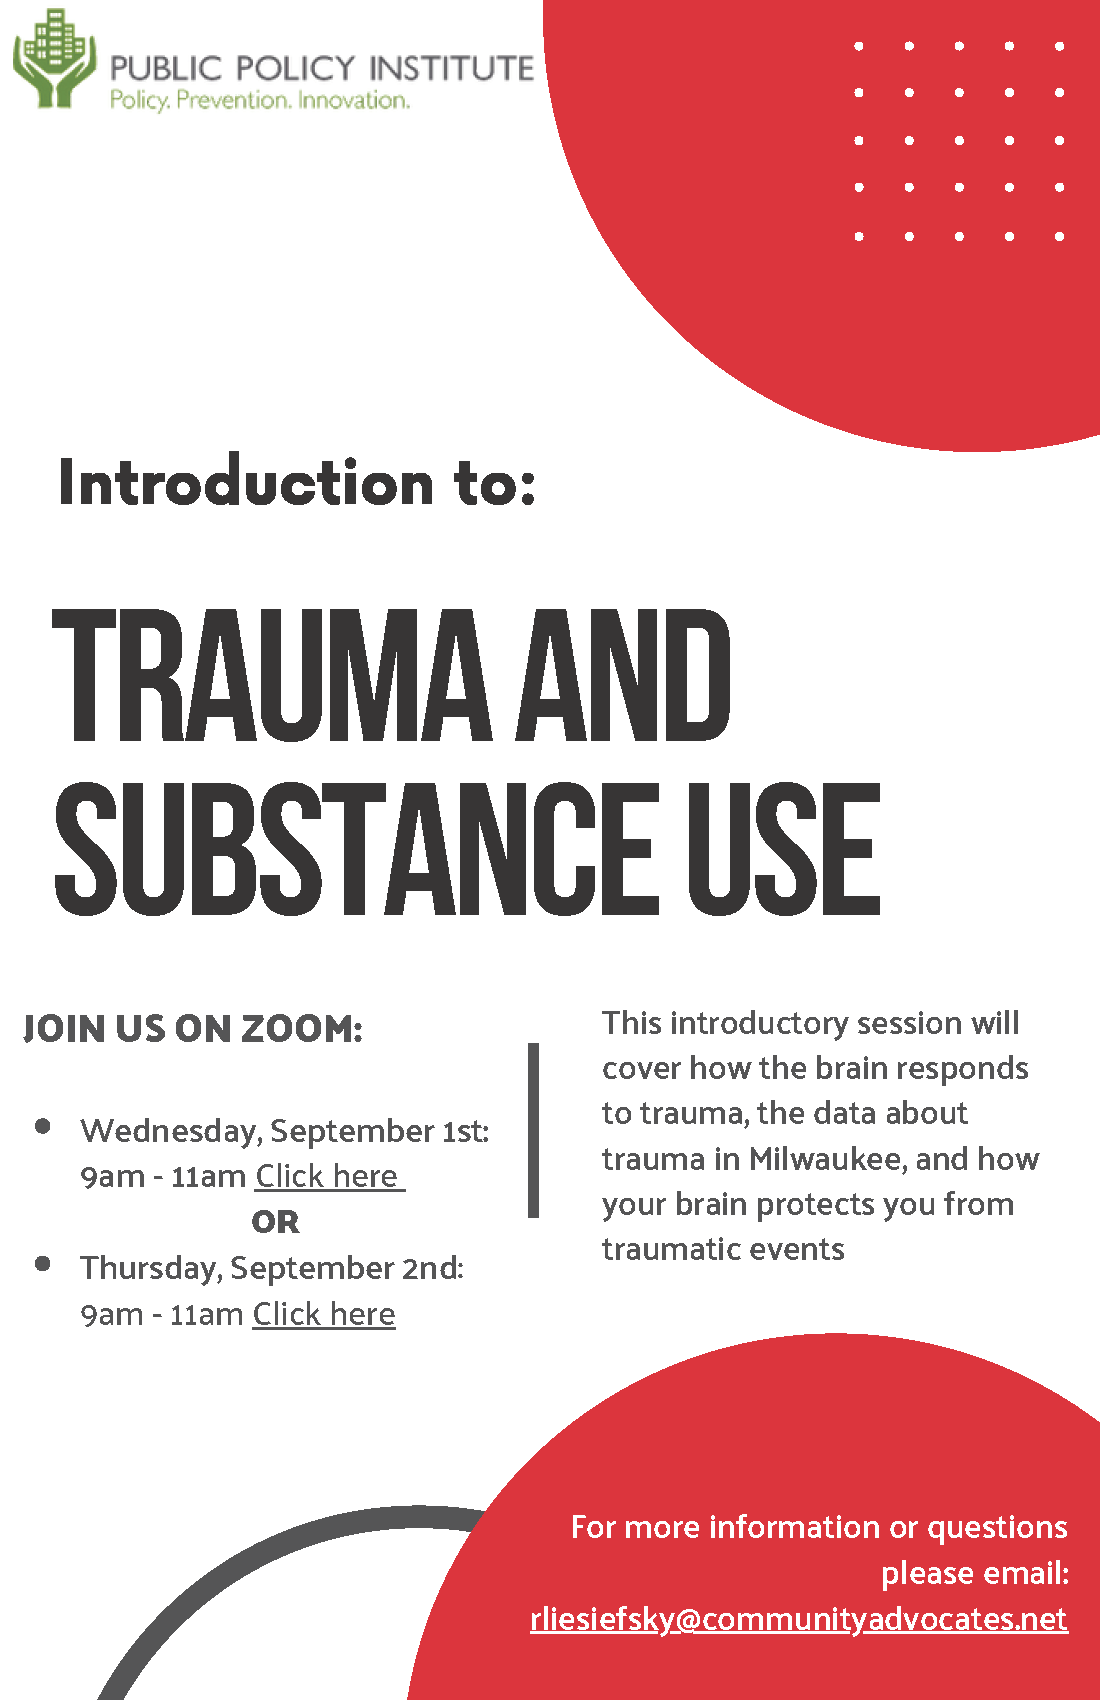 trauma and substance use training flyer